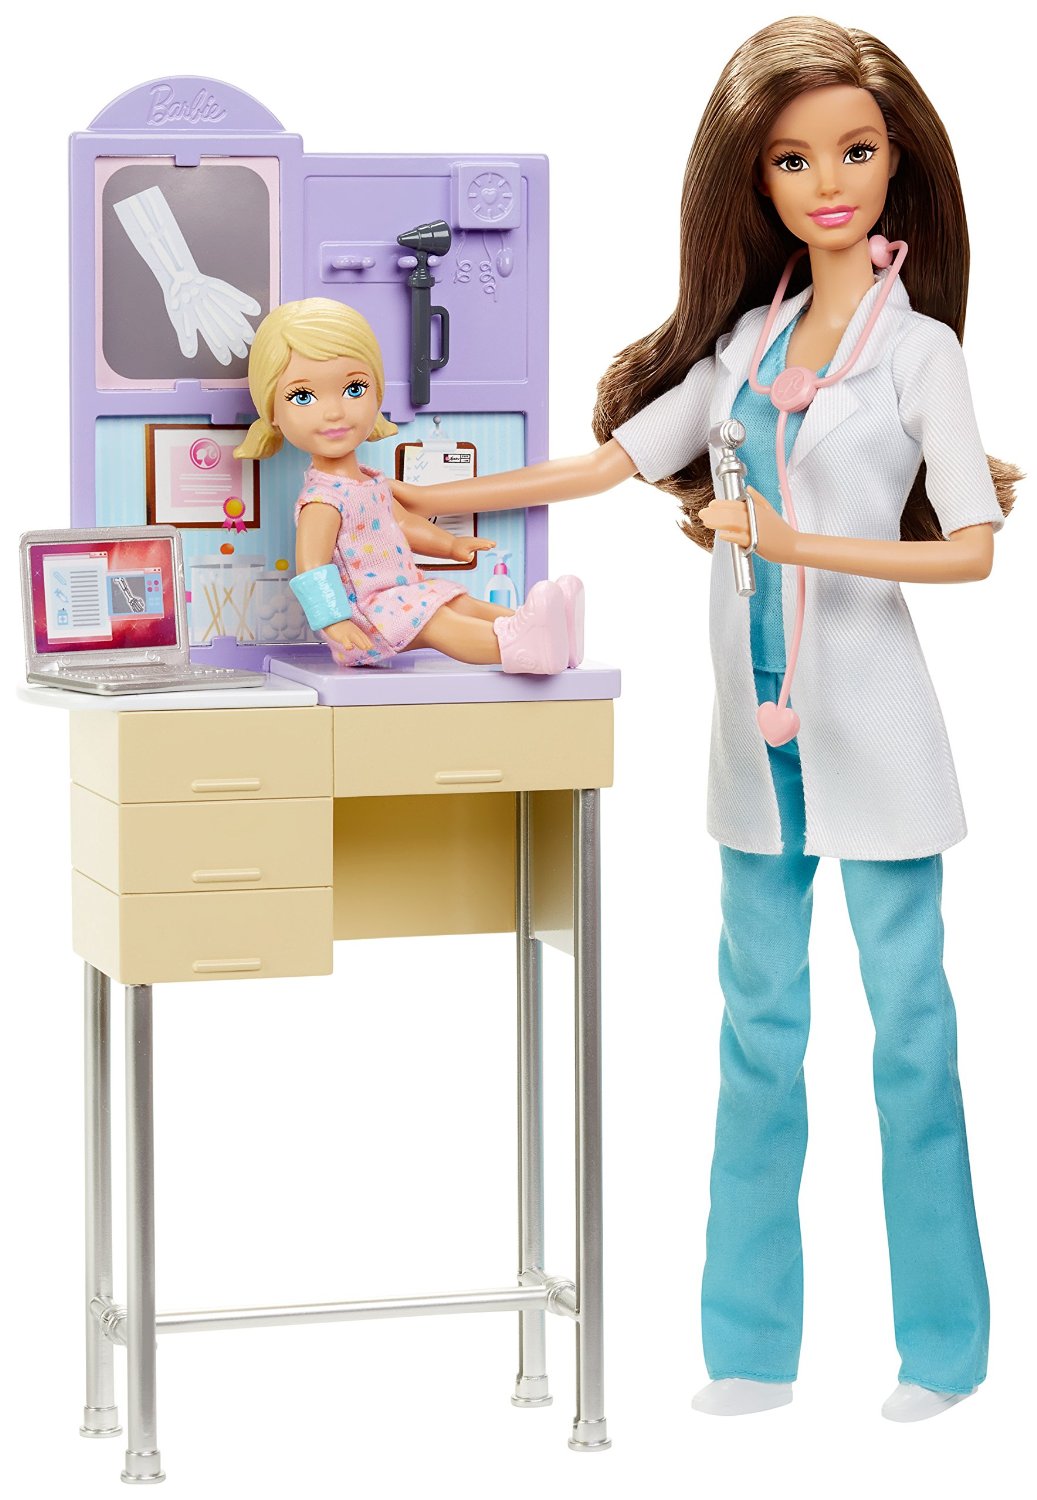 Barbie-Careers-Pediatrician-Playset-1